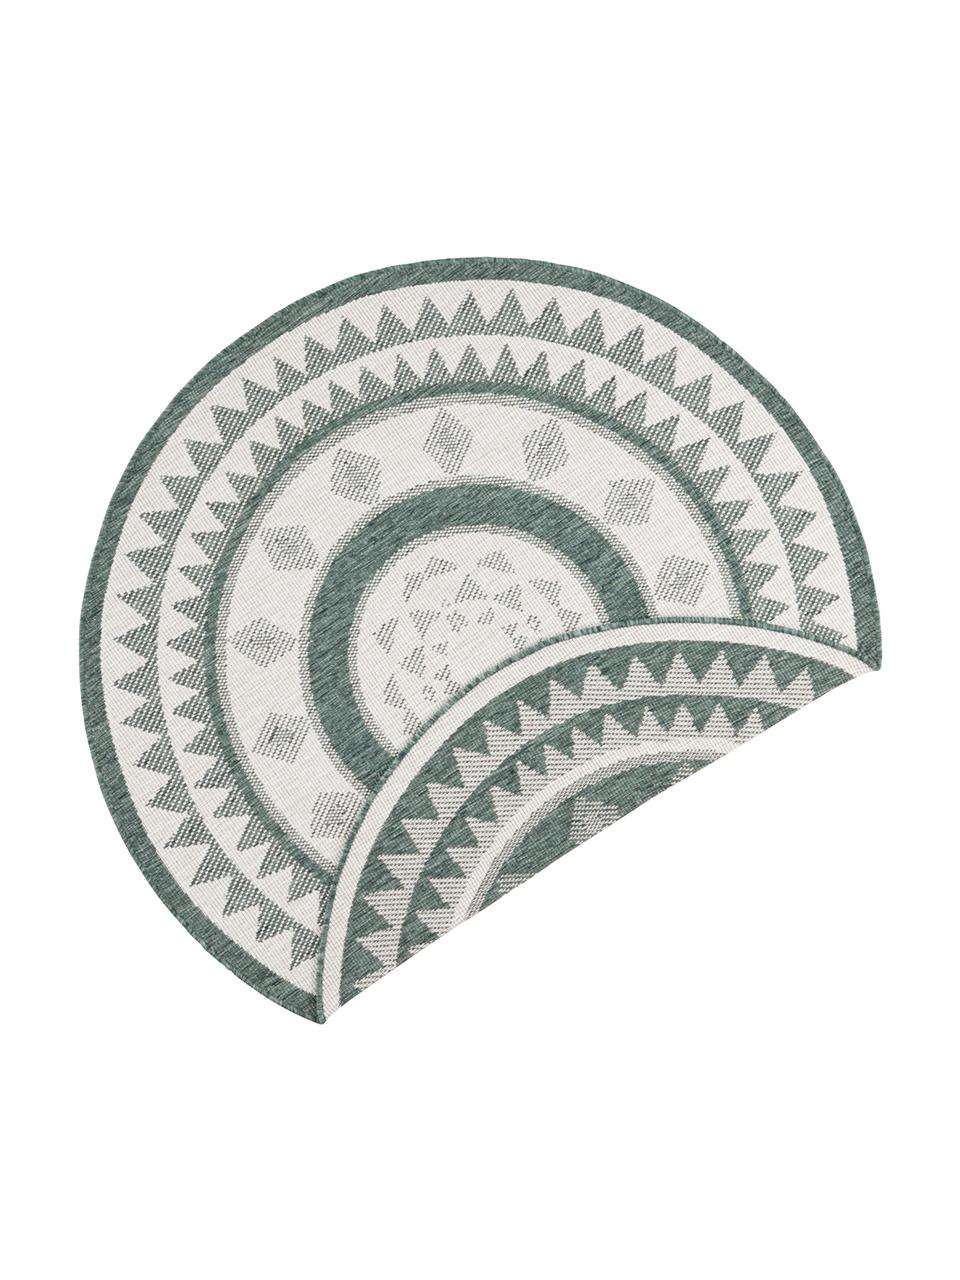 Alfombra redonda reversible de interior/exterior Jamaica, Verde, crema, Ø 200 cm (Tamaño L)